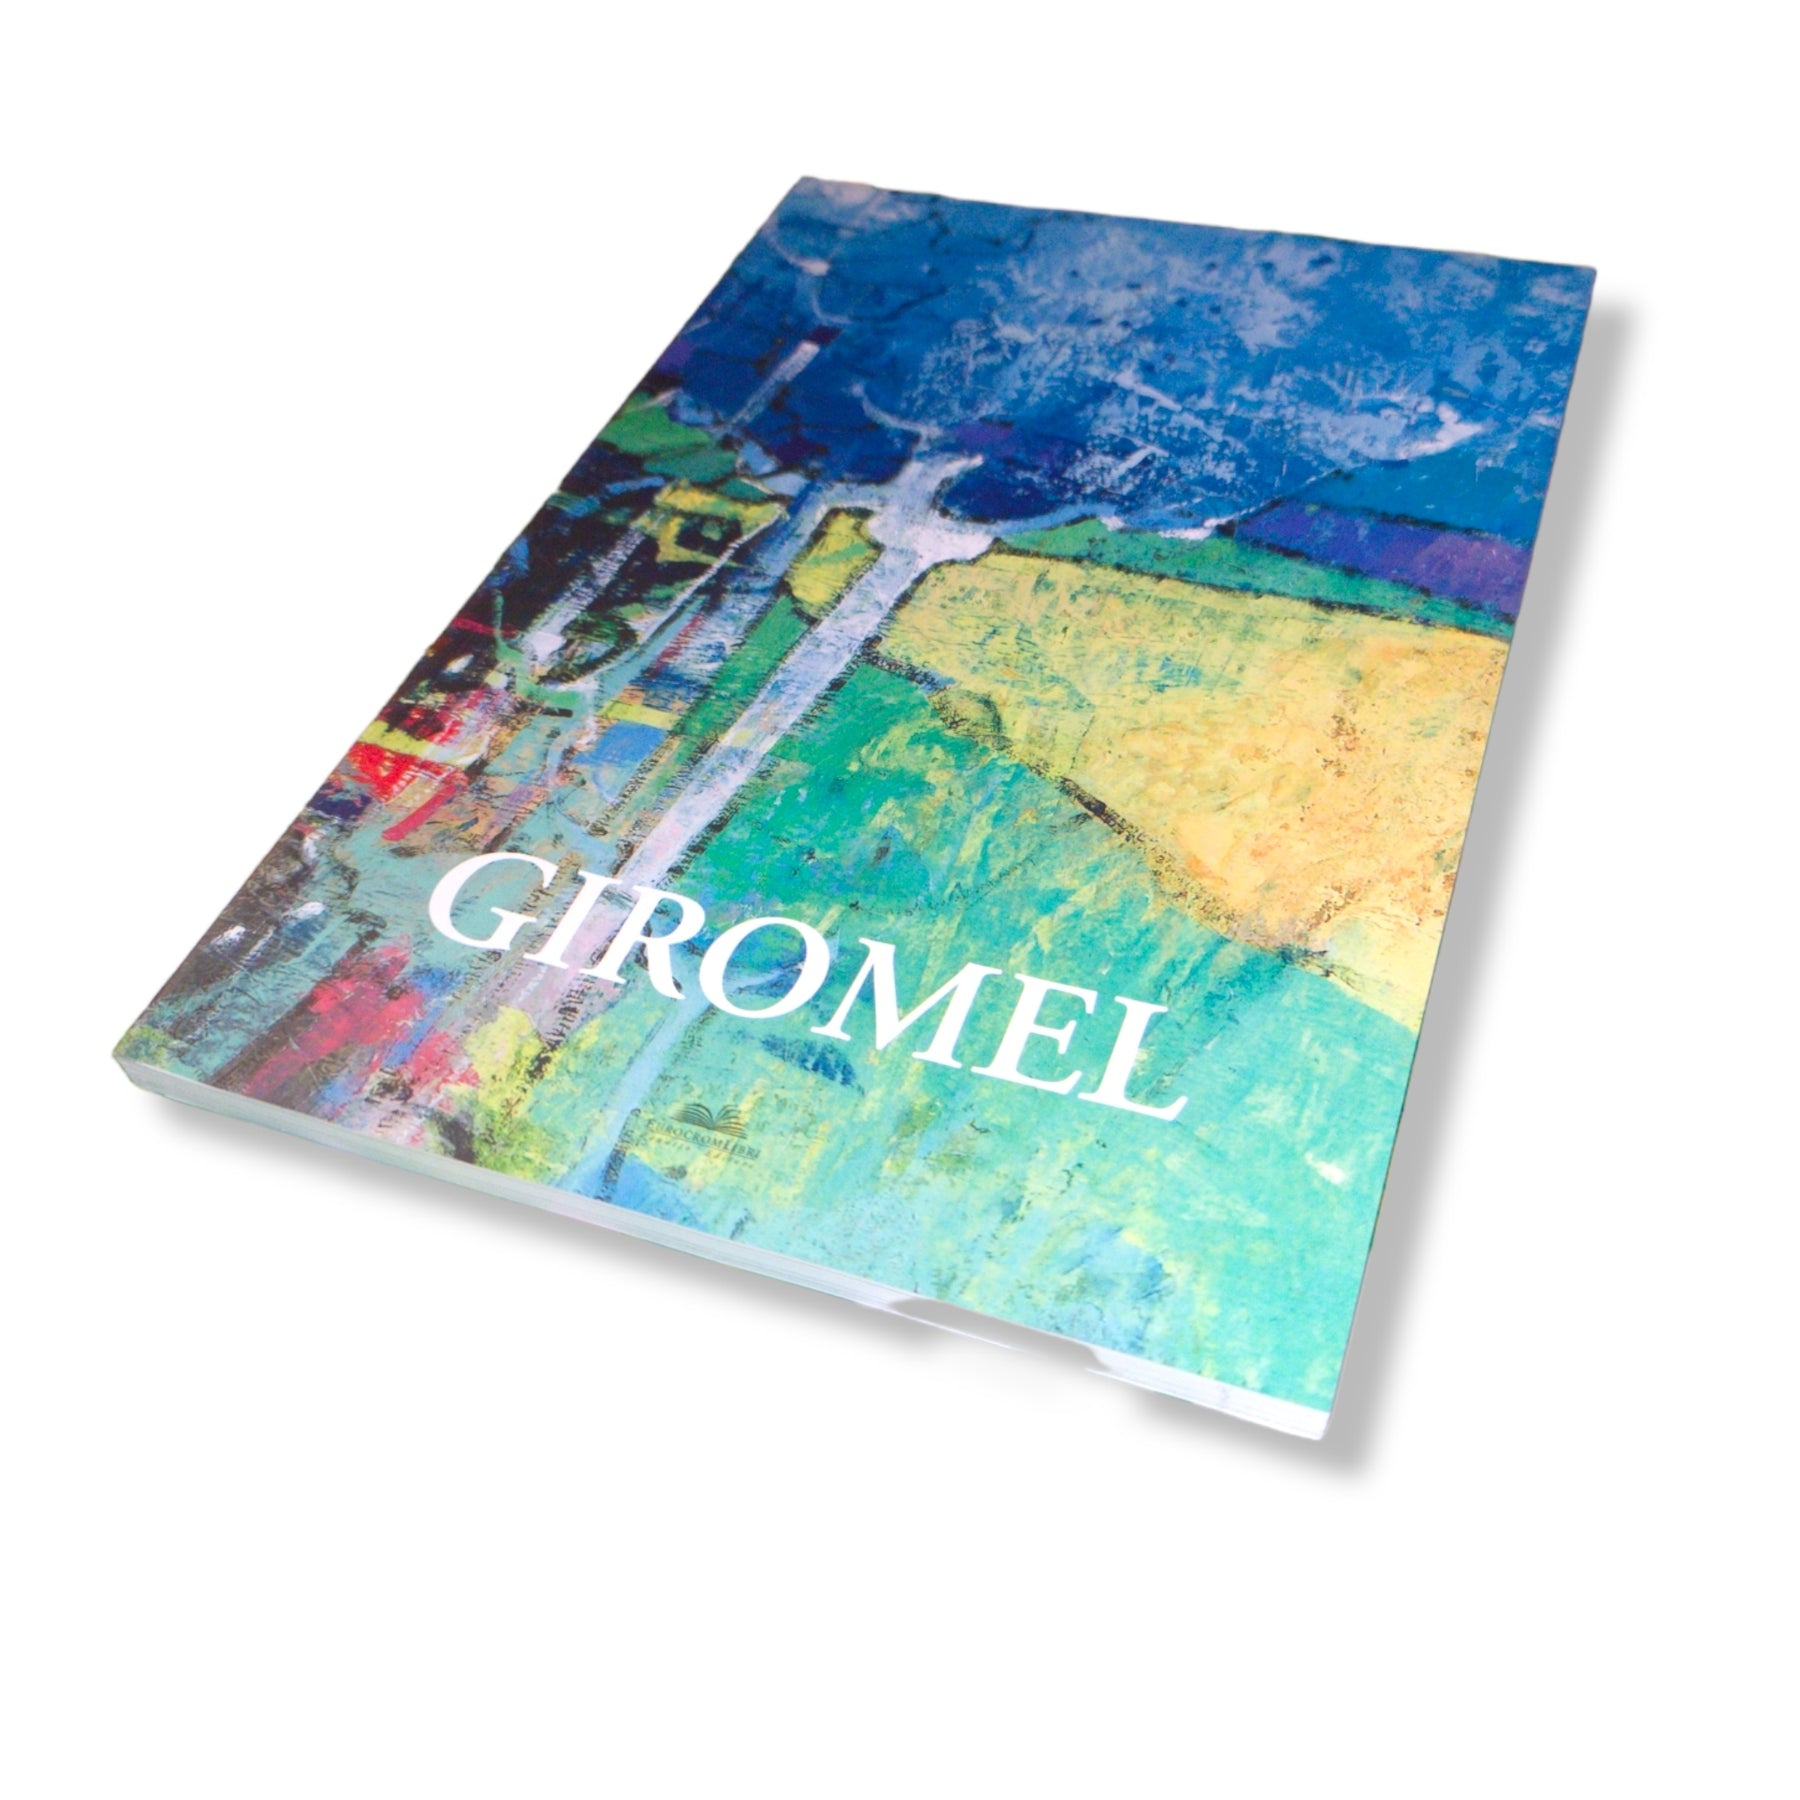 Complete Catalog Sergio Giromel